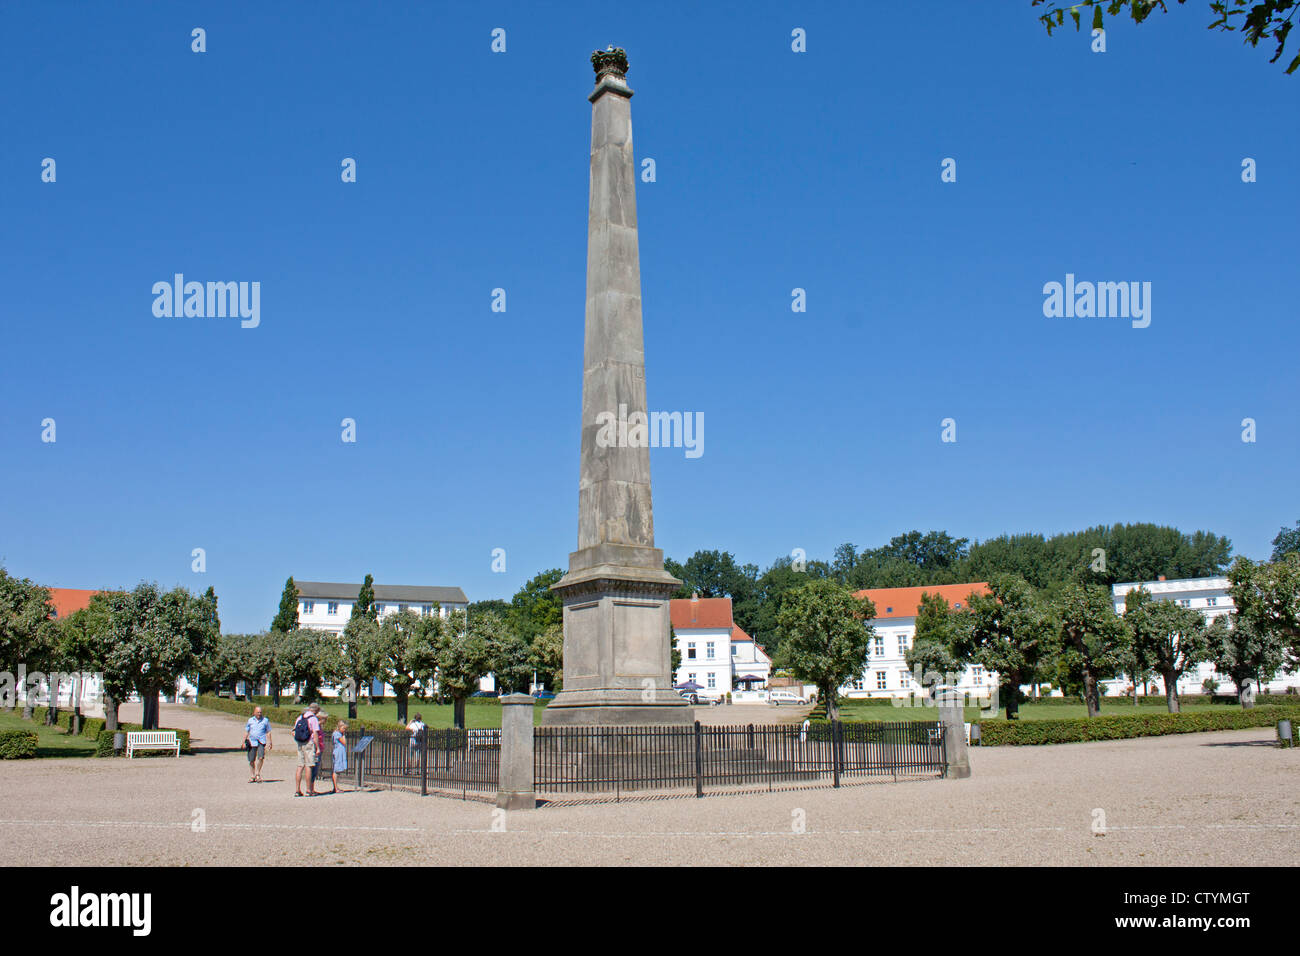 obelisk at the centre of the Circus, Putbus, Ruegen Island, Baltic Sea Coast, Mecklenburg-West Pomerania, Germany Stock Photo